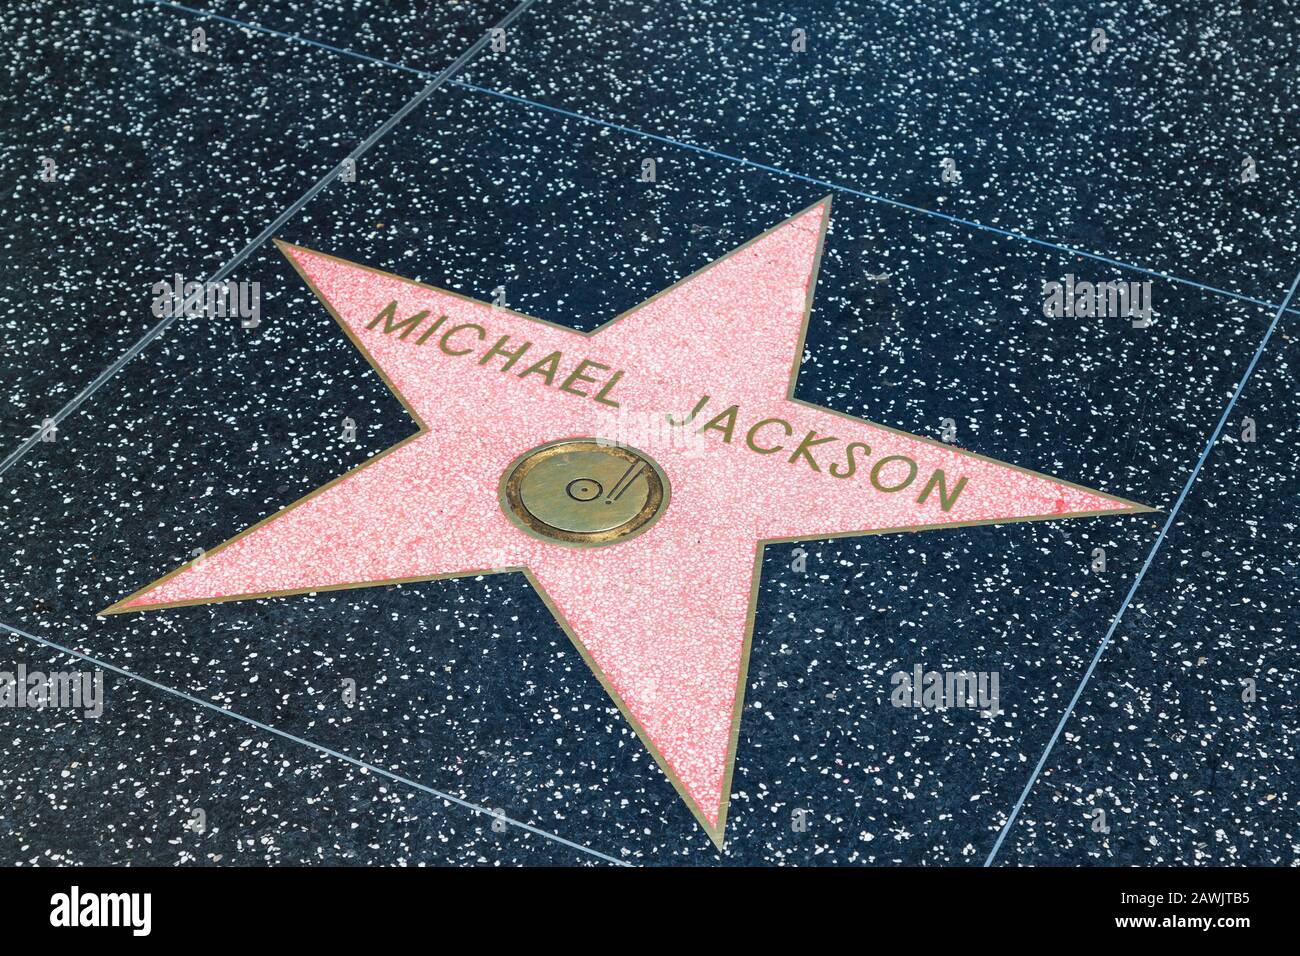 Michael Jackson's Star on the walk of fame Stock Photo